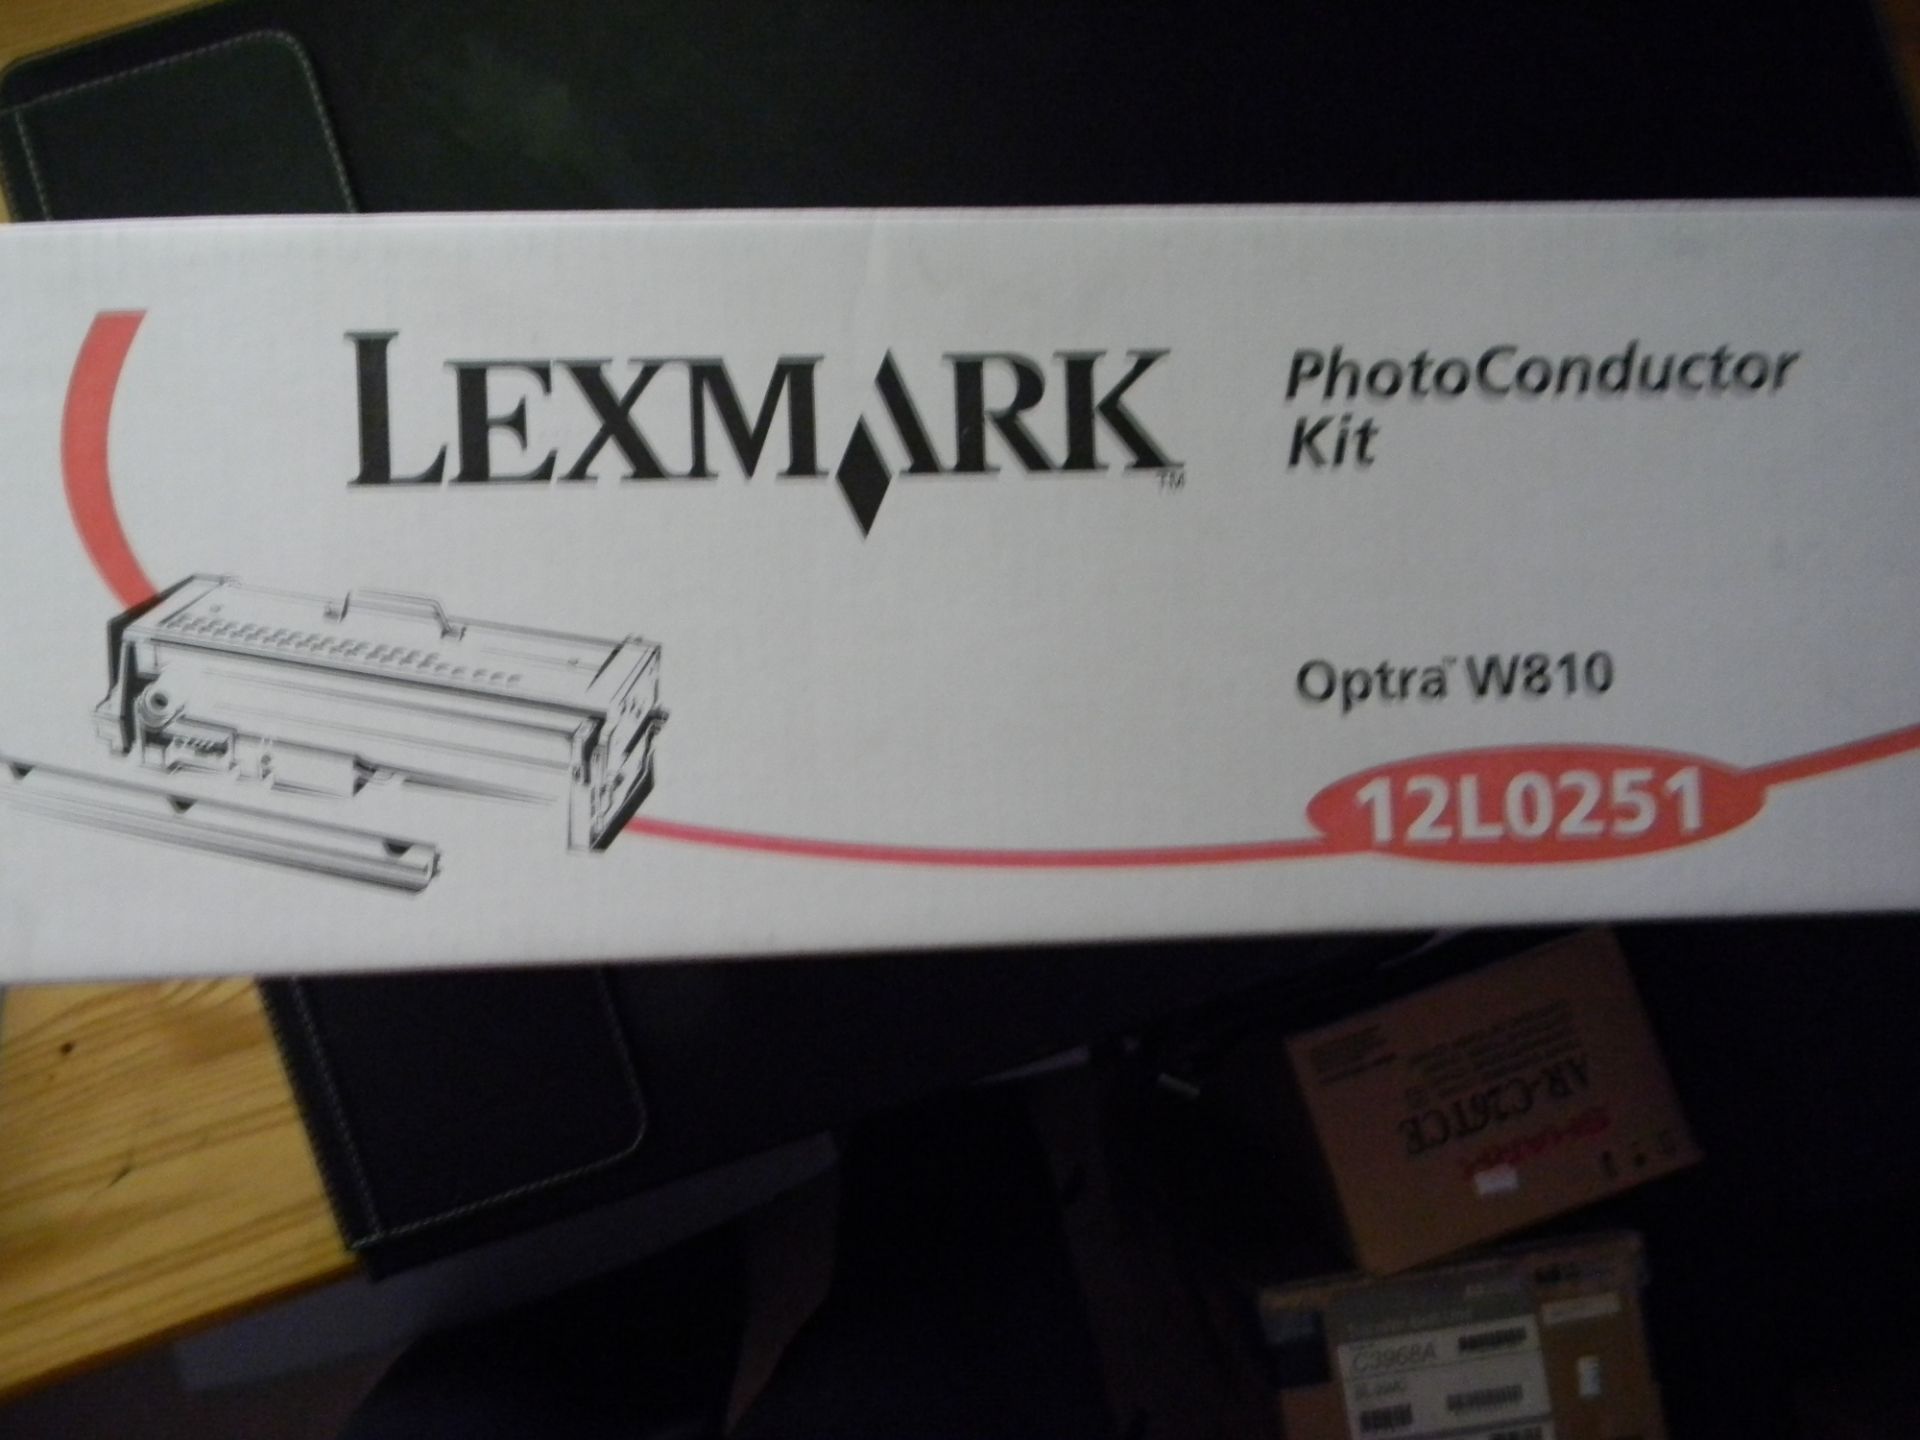 Lexmark PhotoConductor Kit Optra W810 12L0251